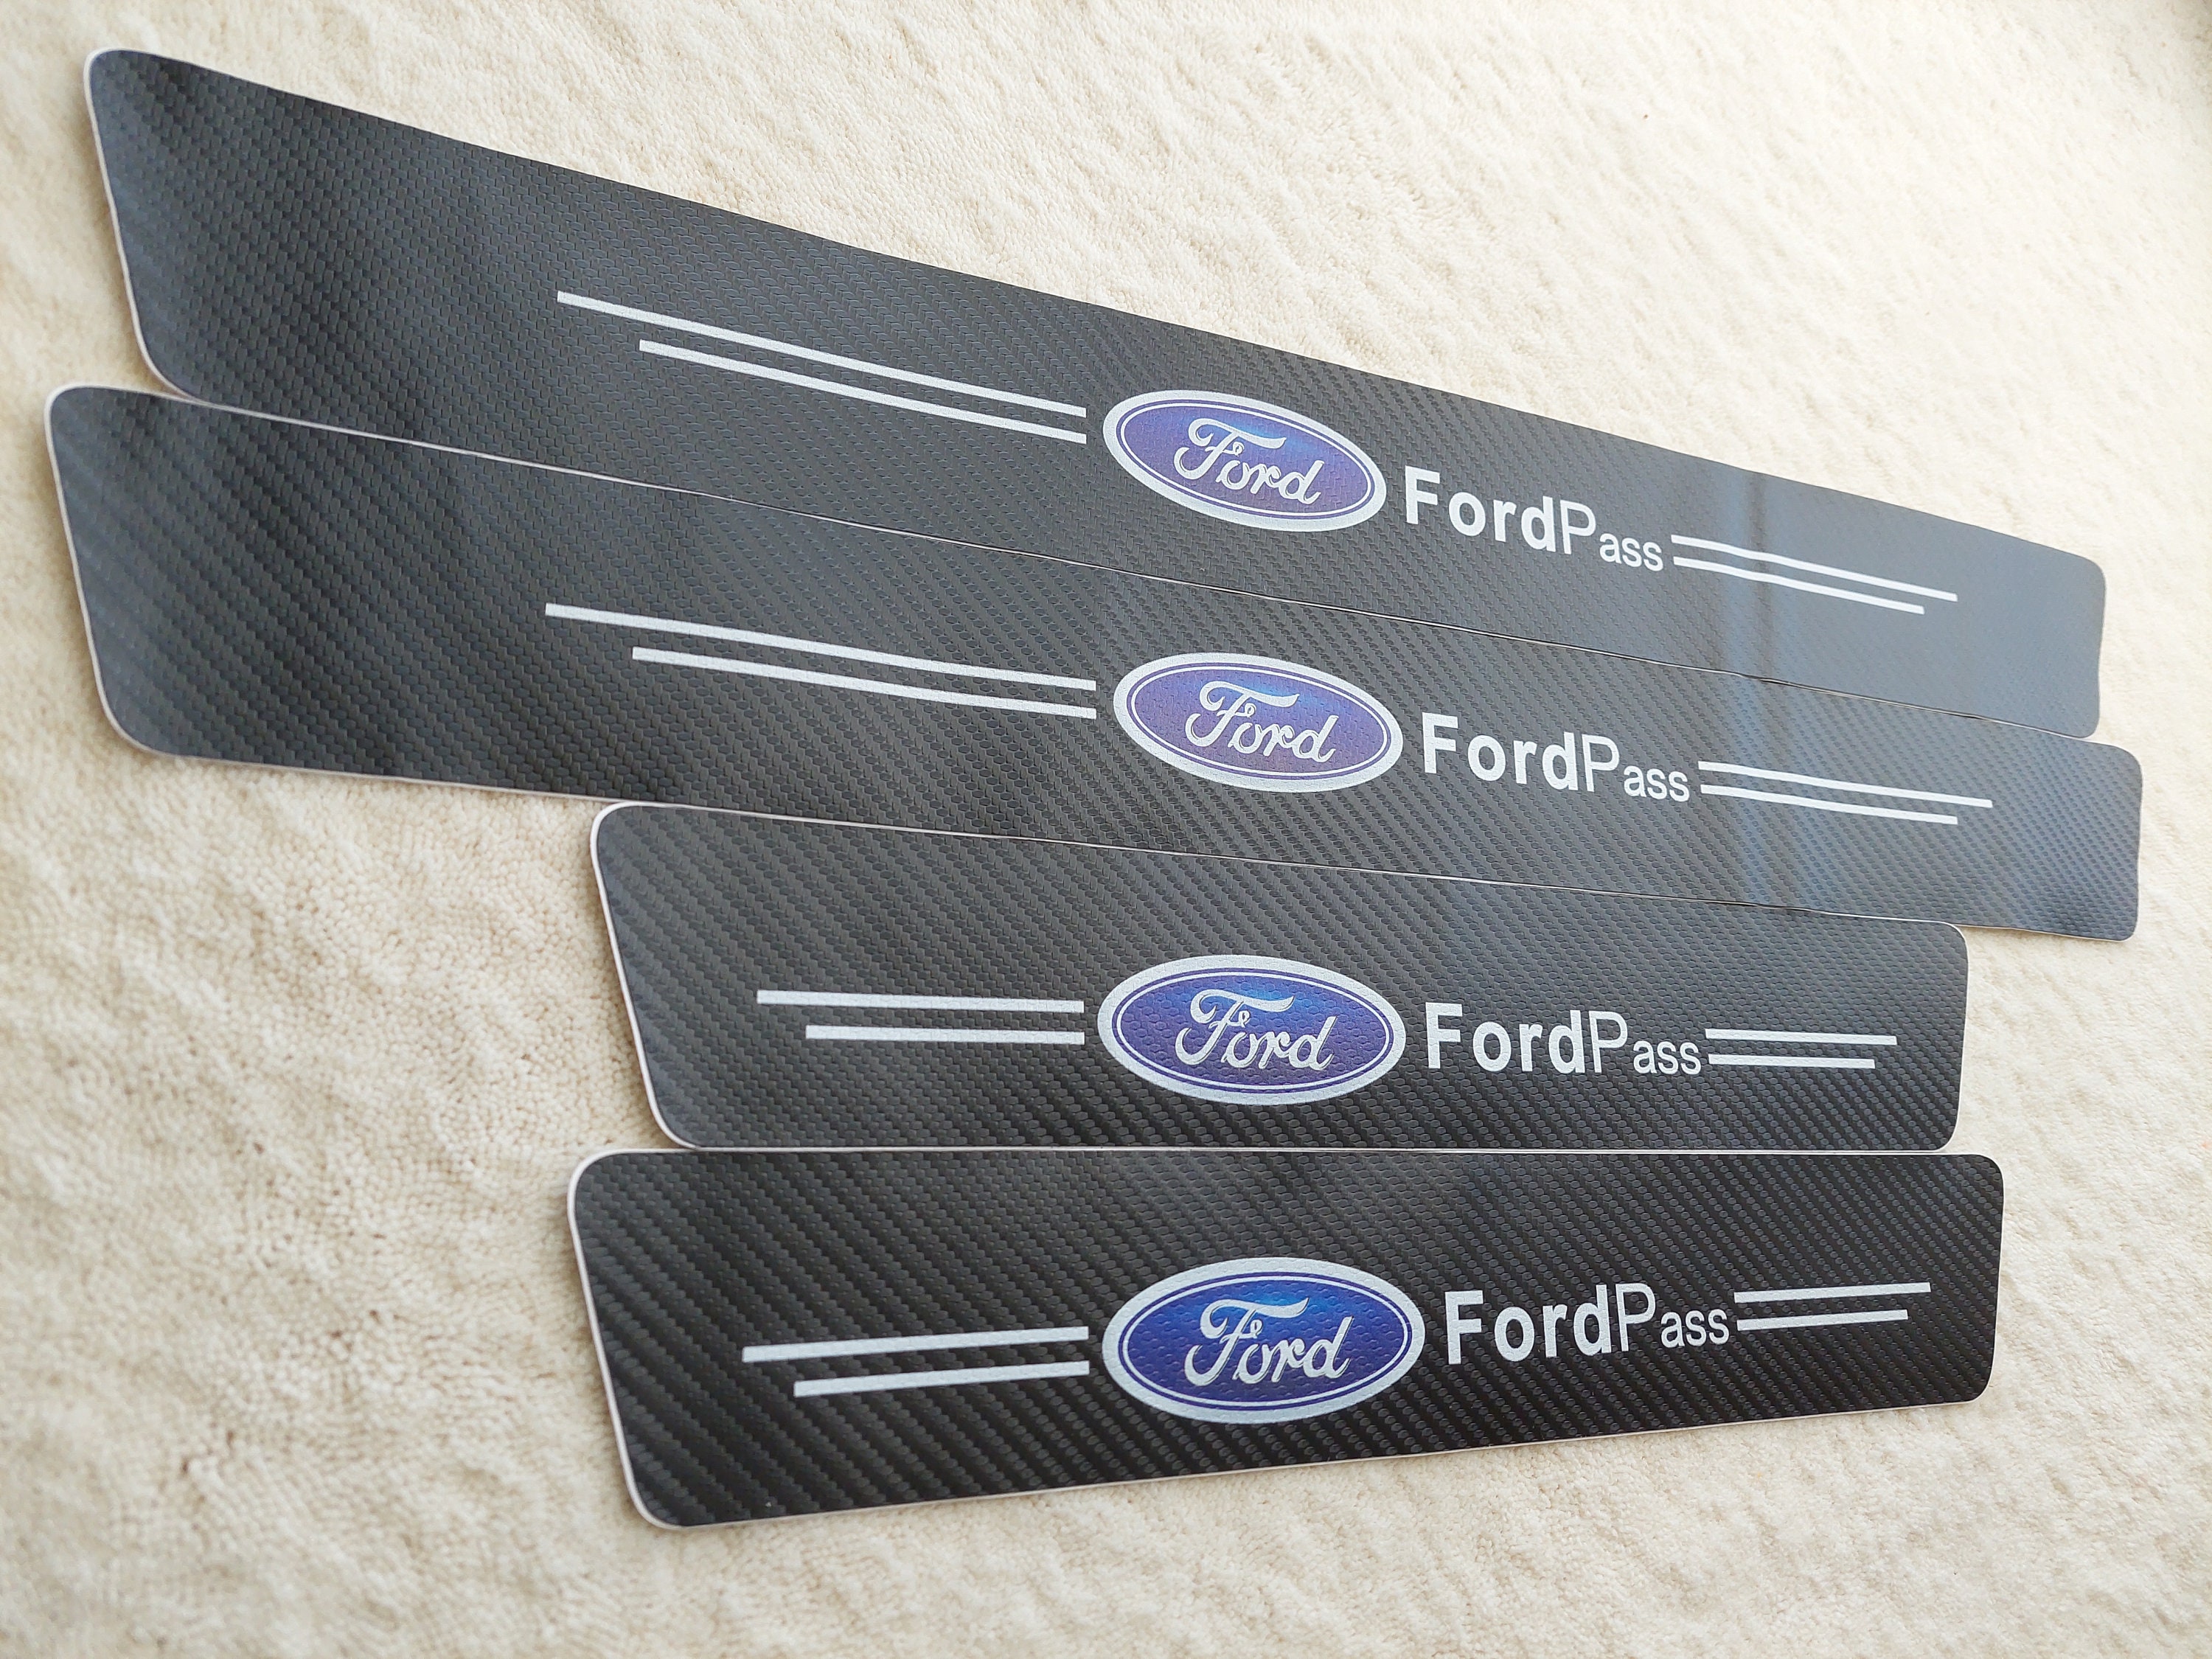 4 Pcs set Car Door Sill Scuff Protector Carbon Fiber Sticker Strip for  Mercedes Anti-scratch 